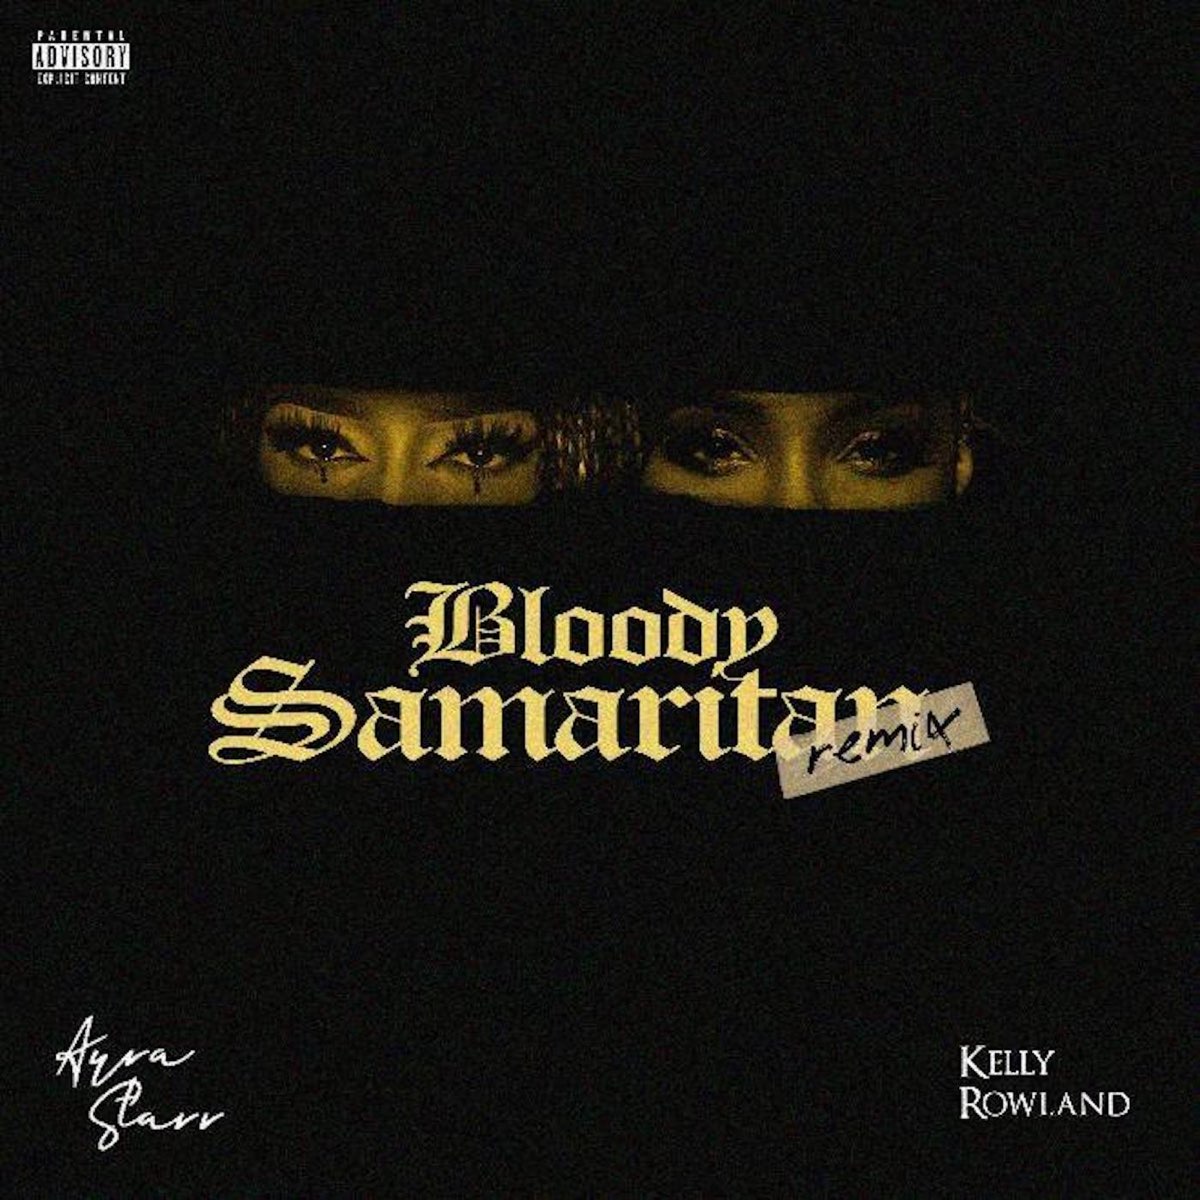 Ayra Starr & Kelly Rowland — Bloody Samaritan - Remix cover artwork